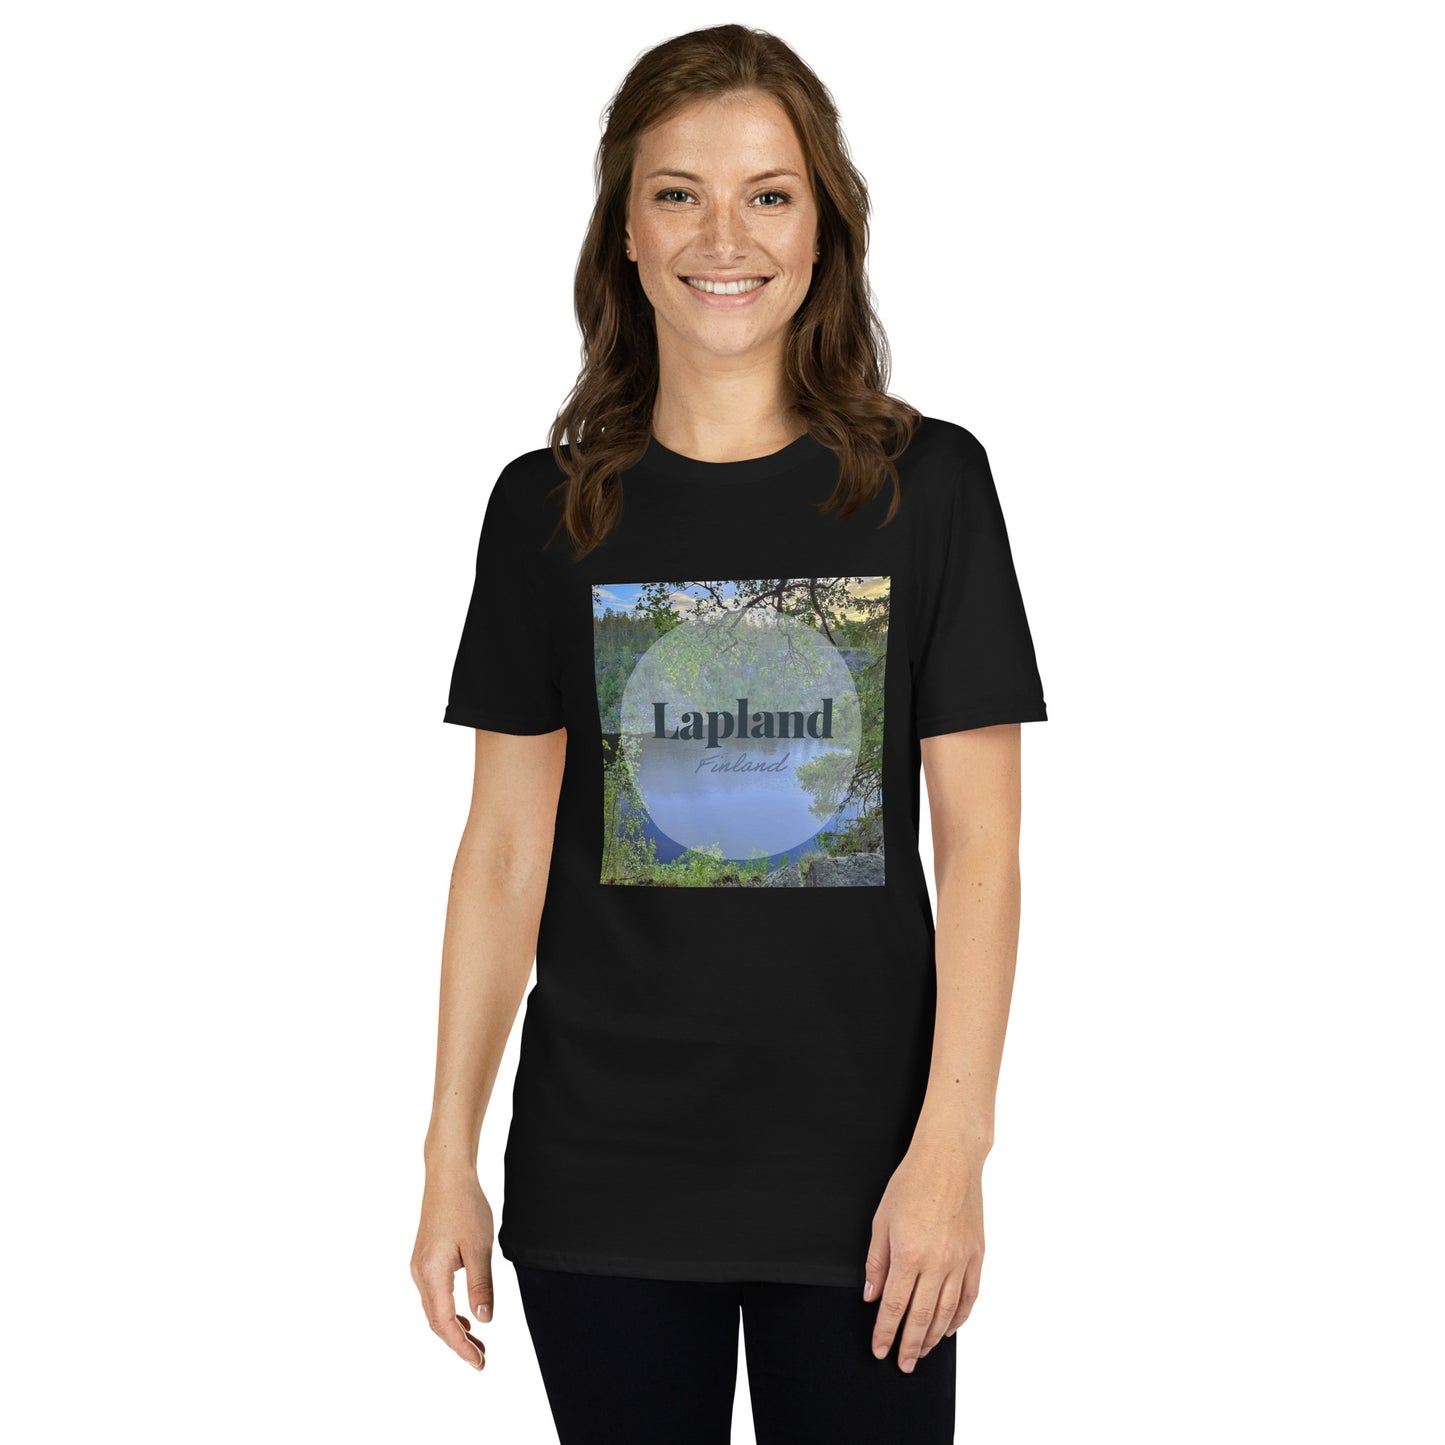 "Lapland" unisex t-shirt